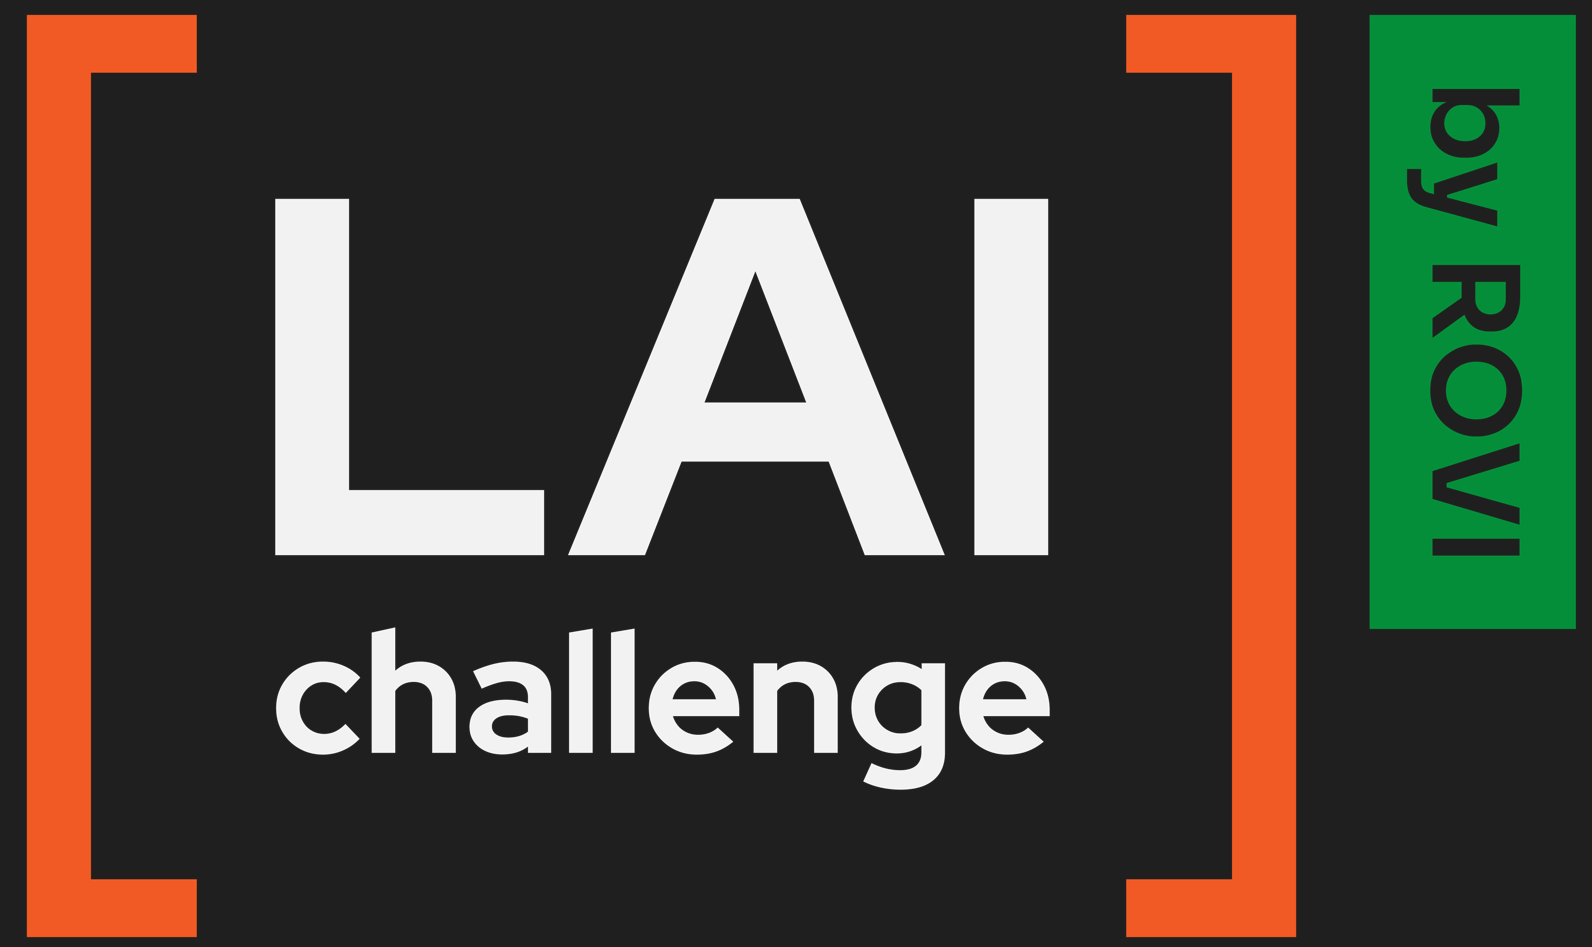 LAI challenge